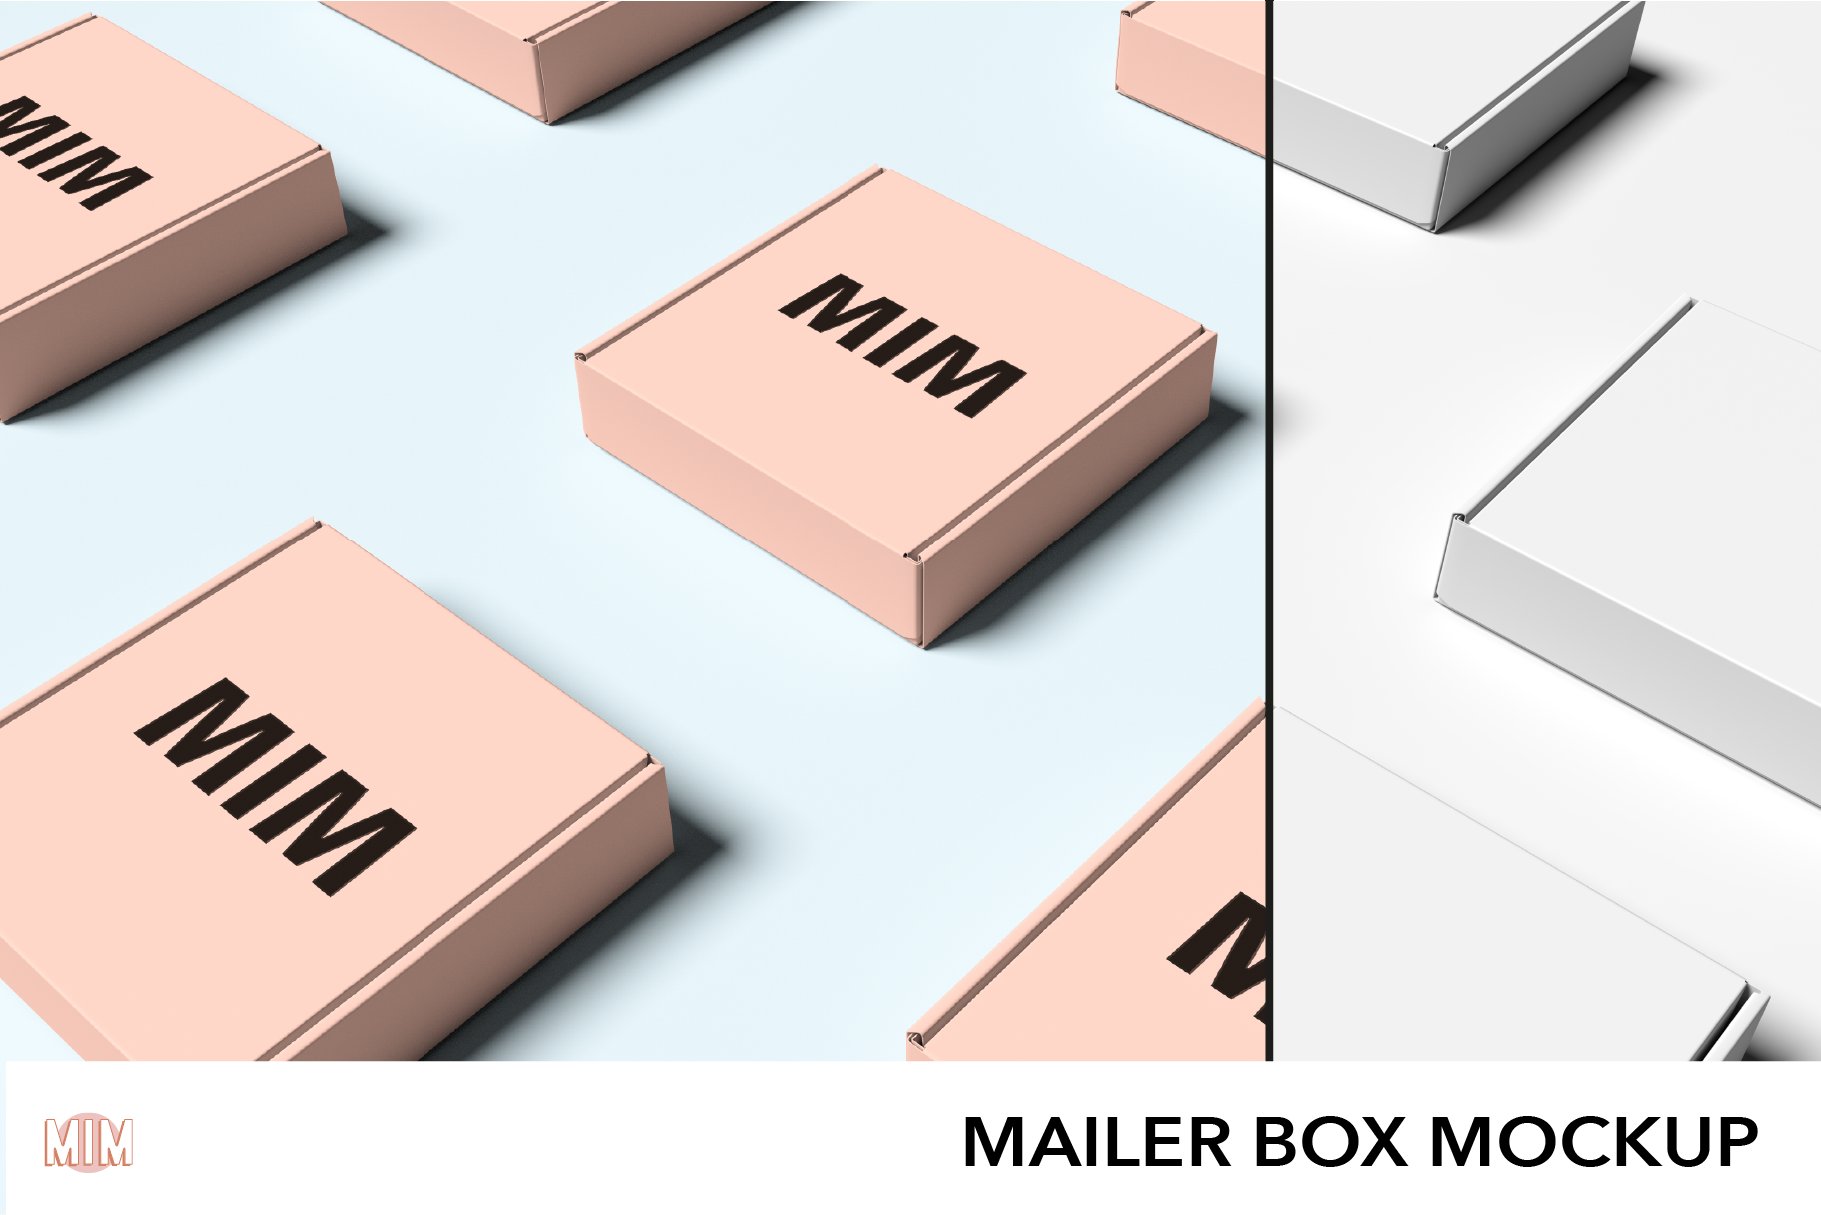 MAILER BOX MOCKUP cover image.